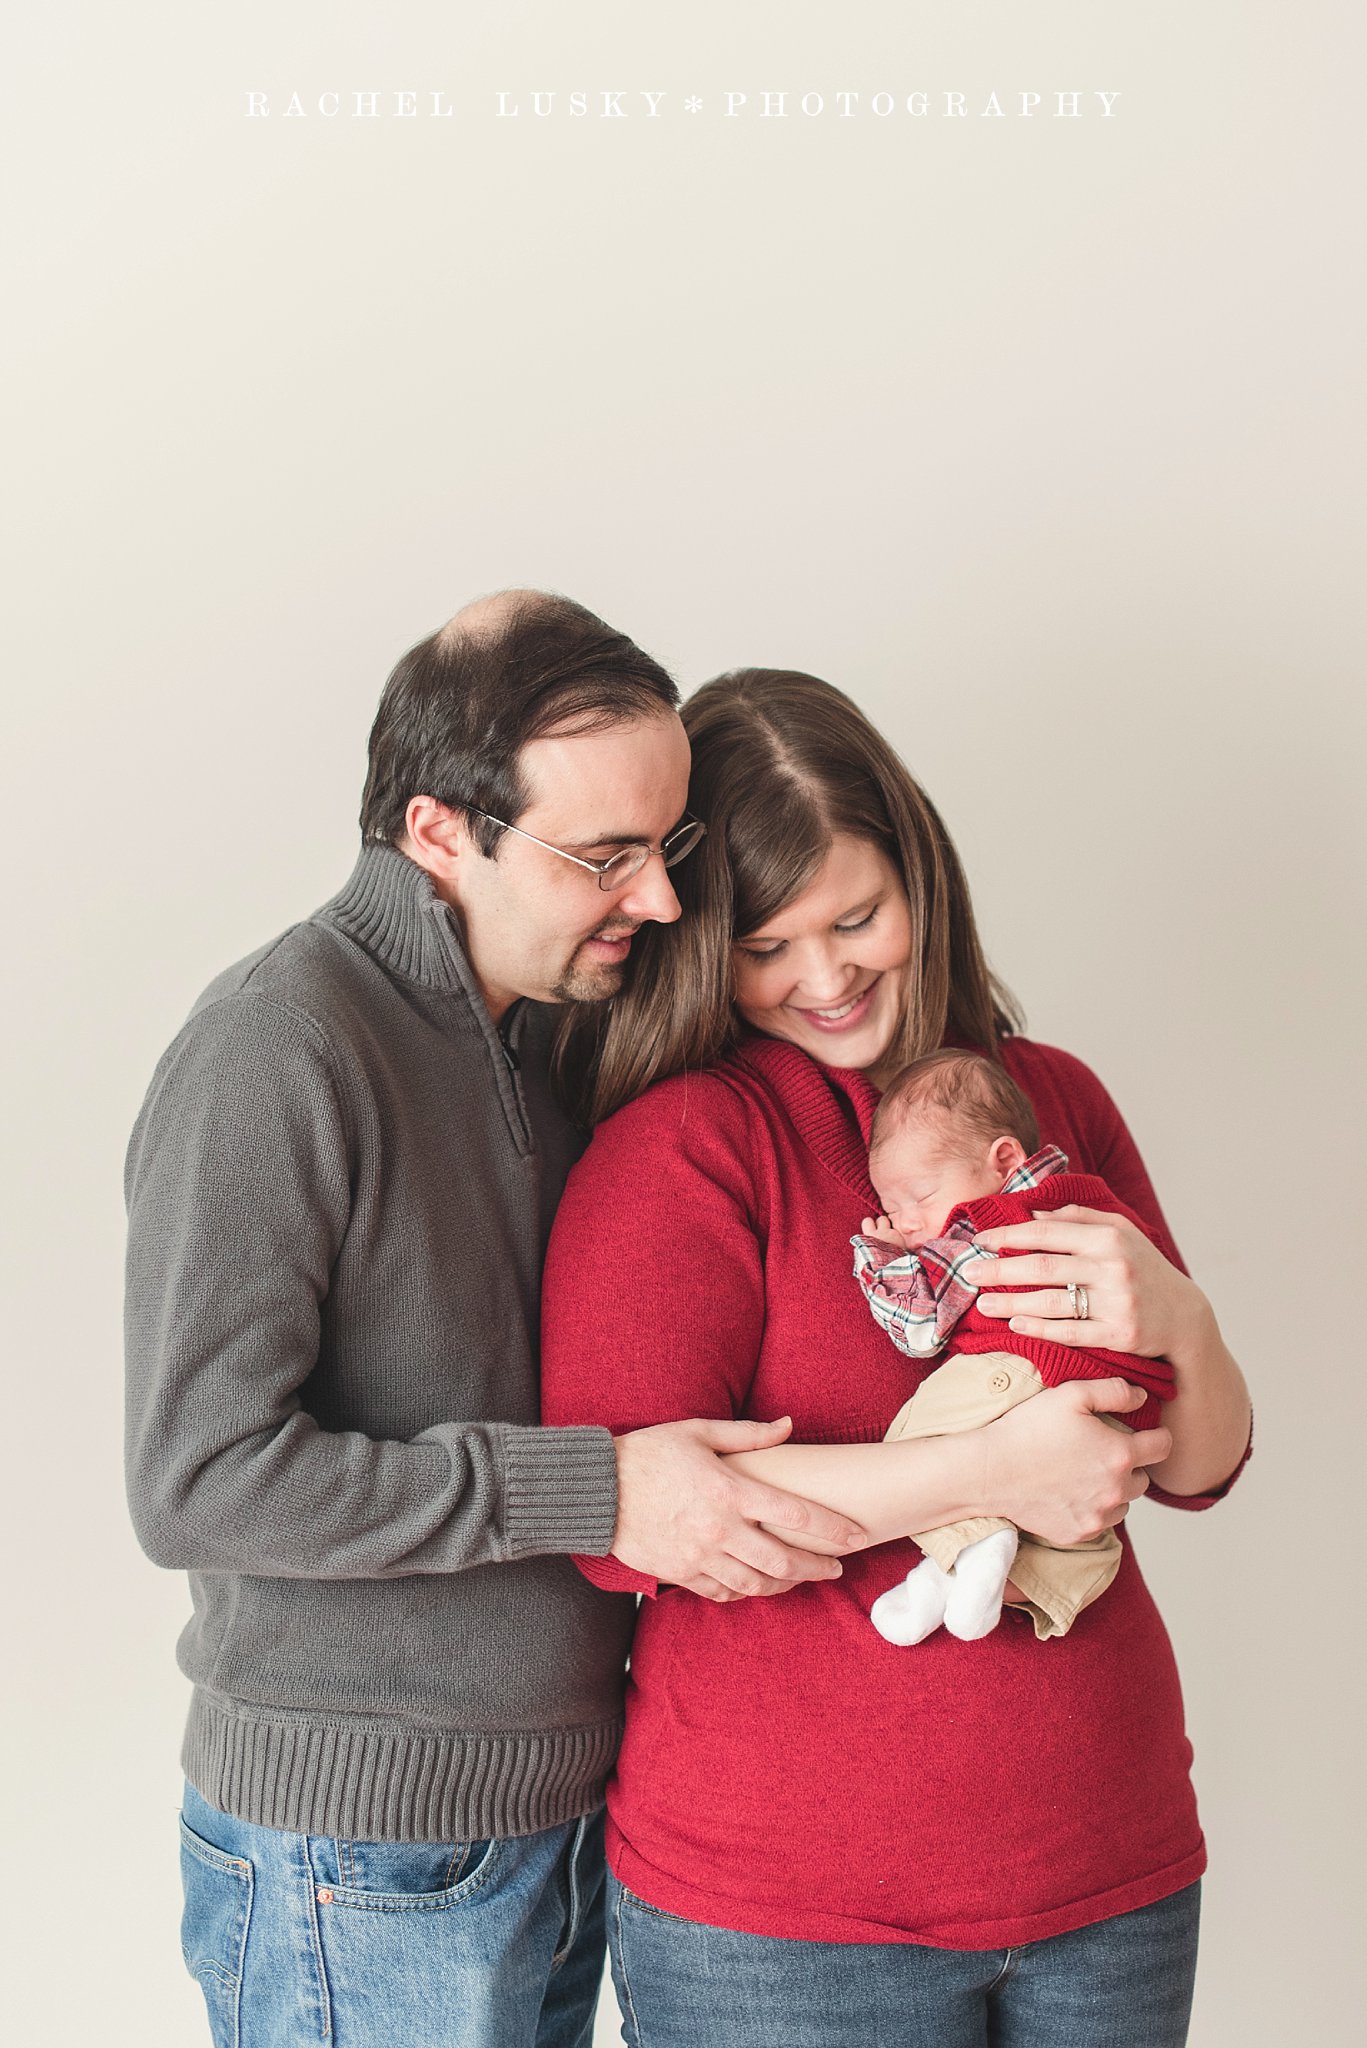 Erie PA Newborn Photographer, baby boy, newborn baby boy